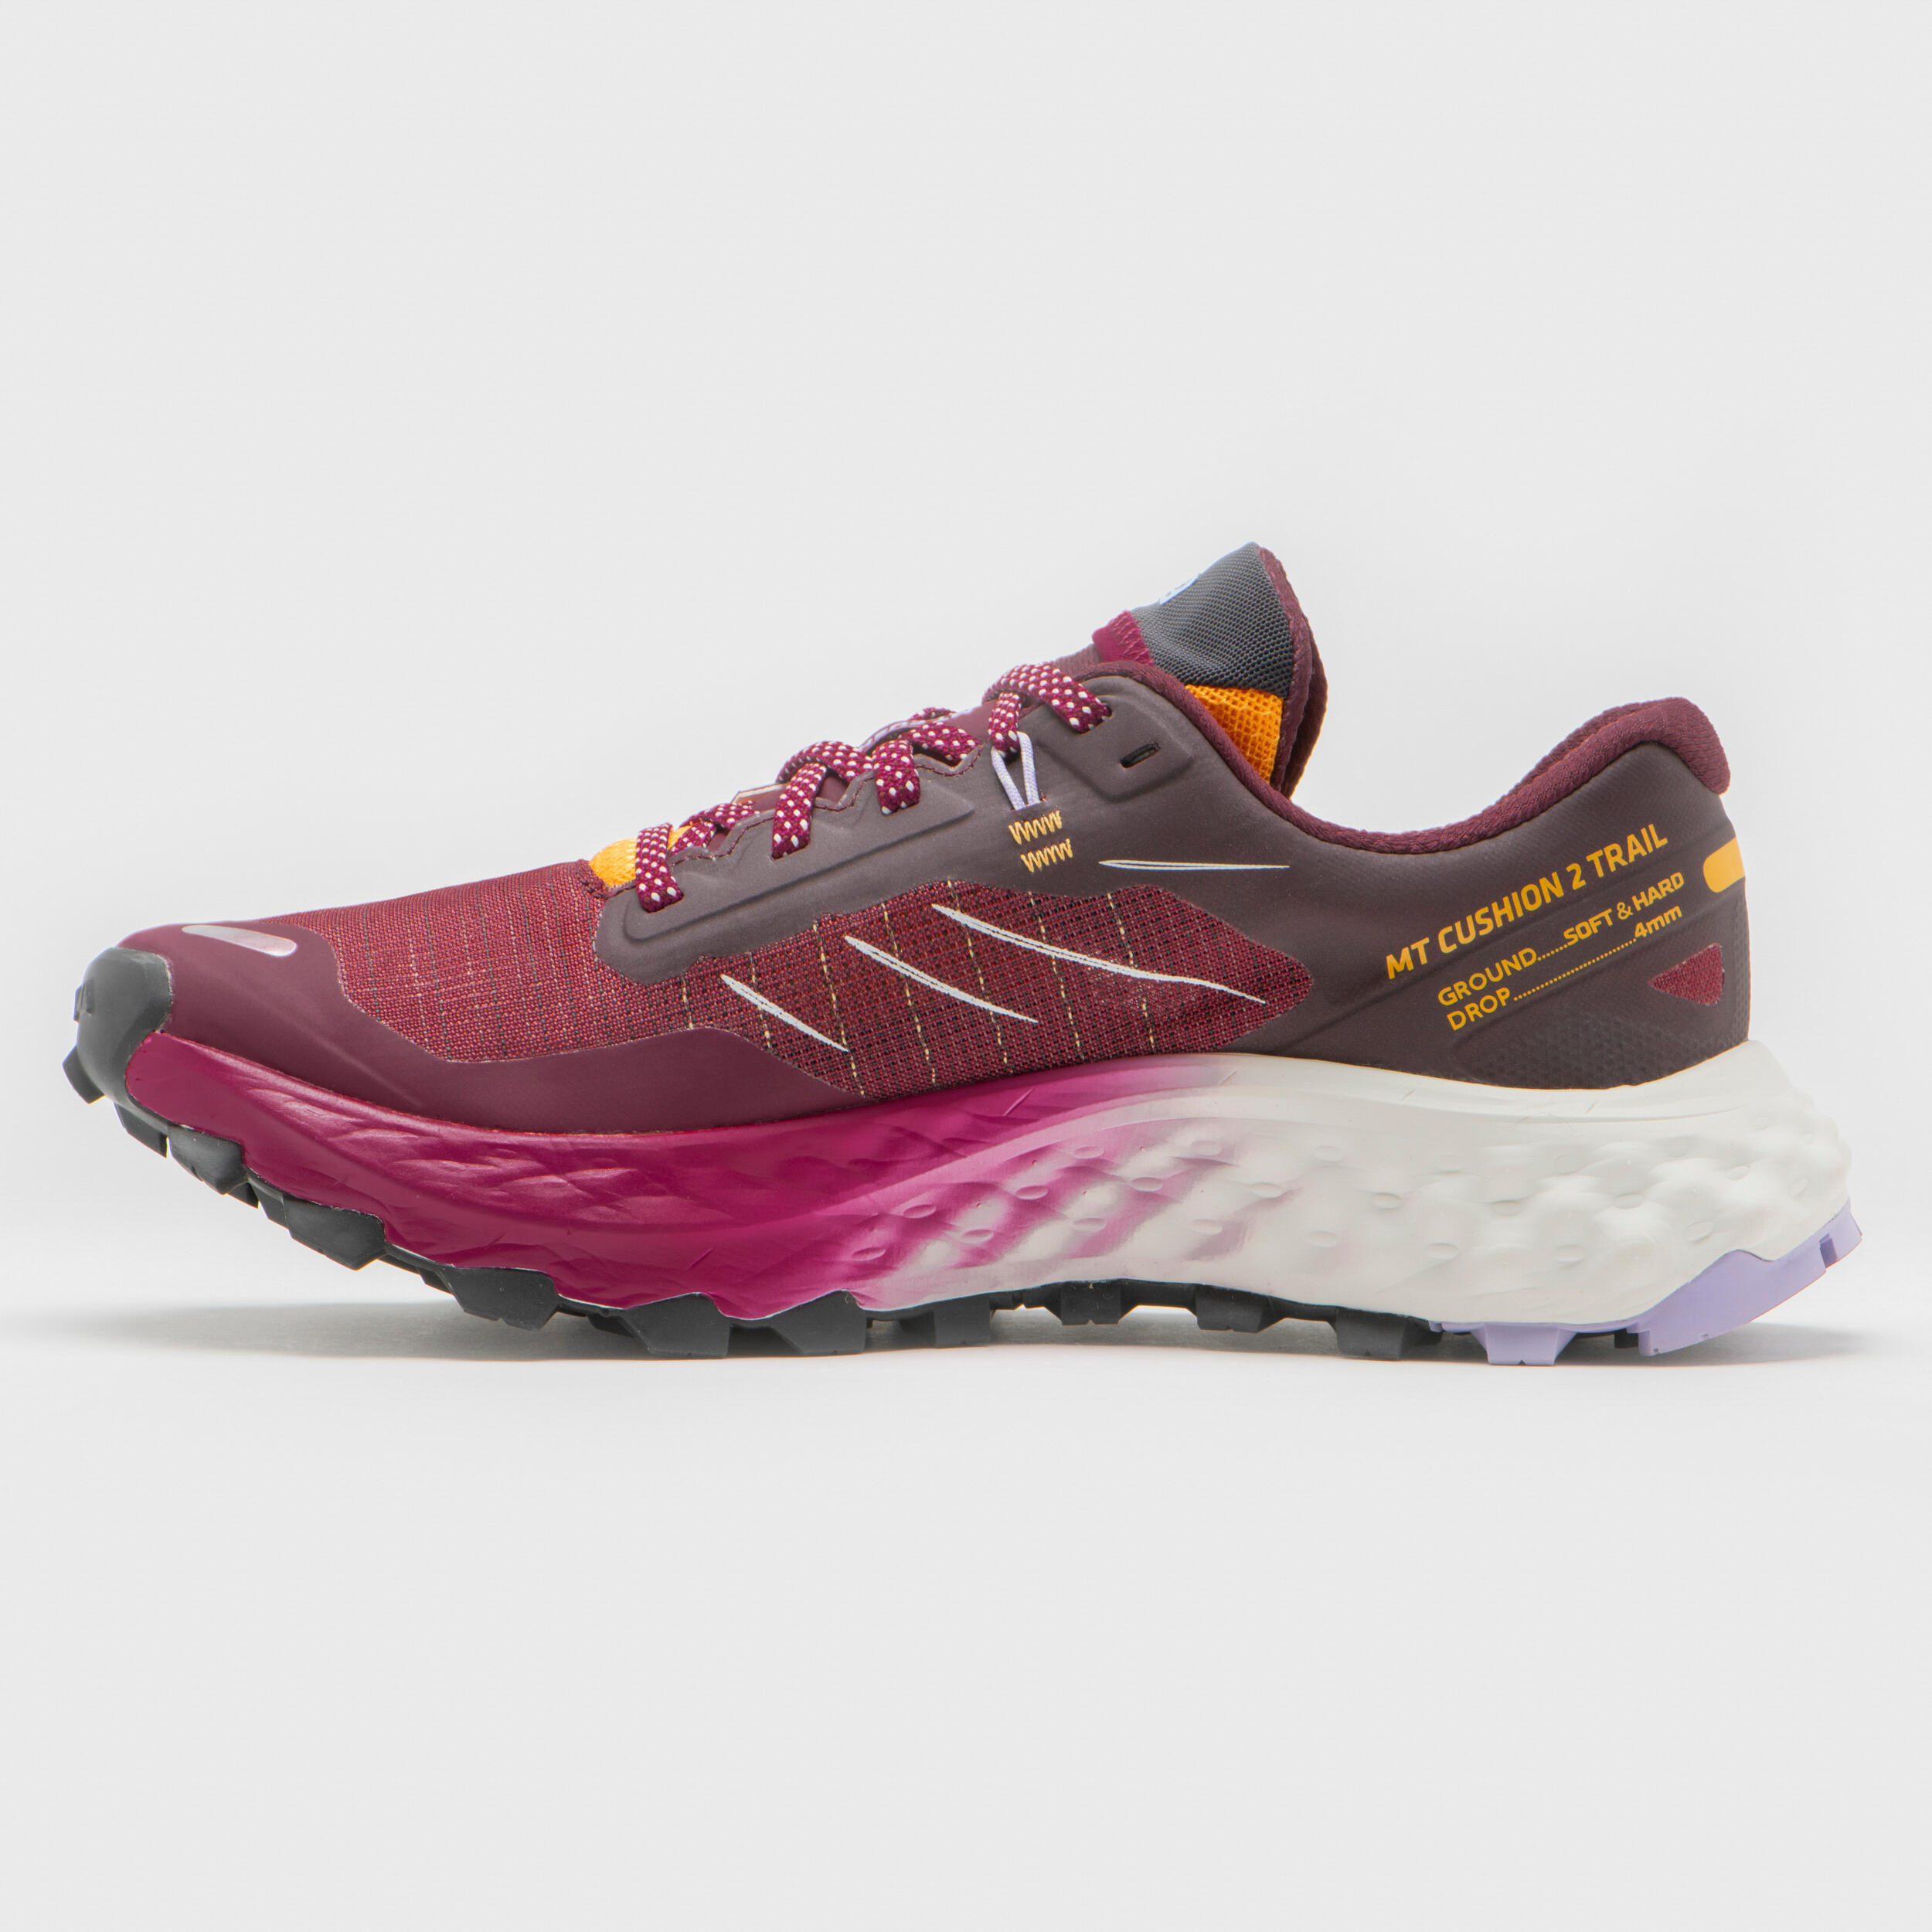 MT CUSHION 2 women's trail running shoes - Raspberry pink 4/10